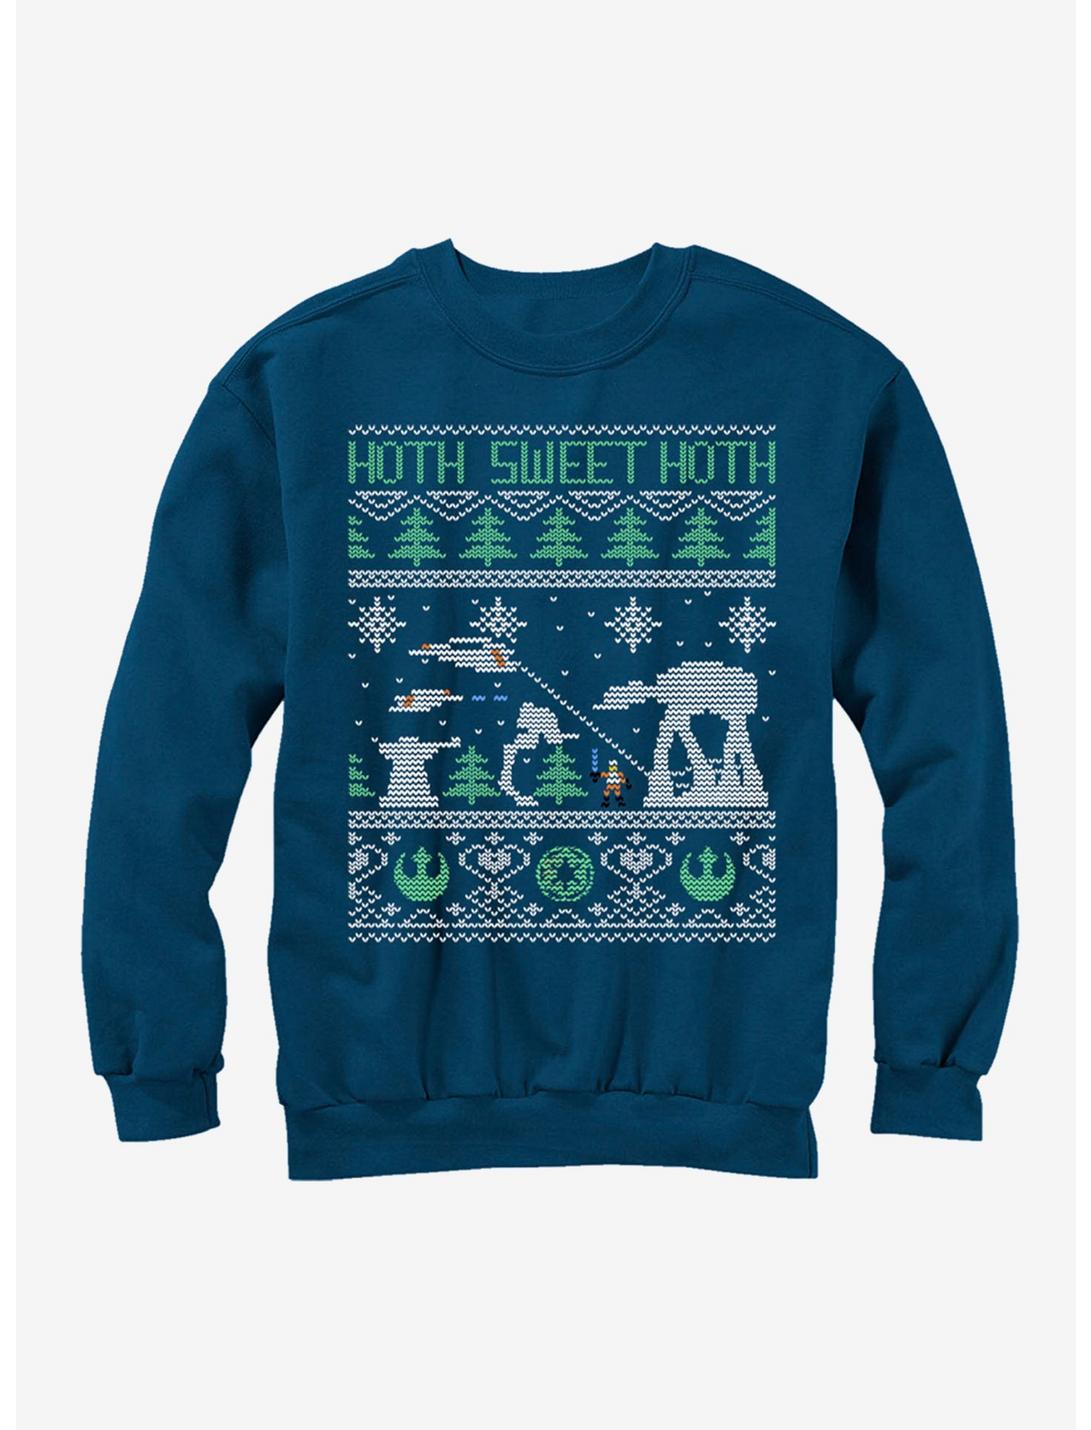 Star Wars Hoth Sweet Hoth Ugly Christmas Sweater Girls Sweatshirt, NAVY, hi-res